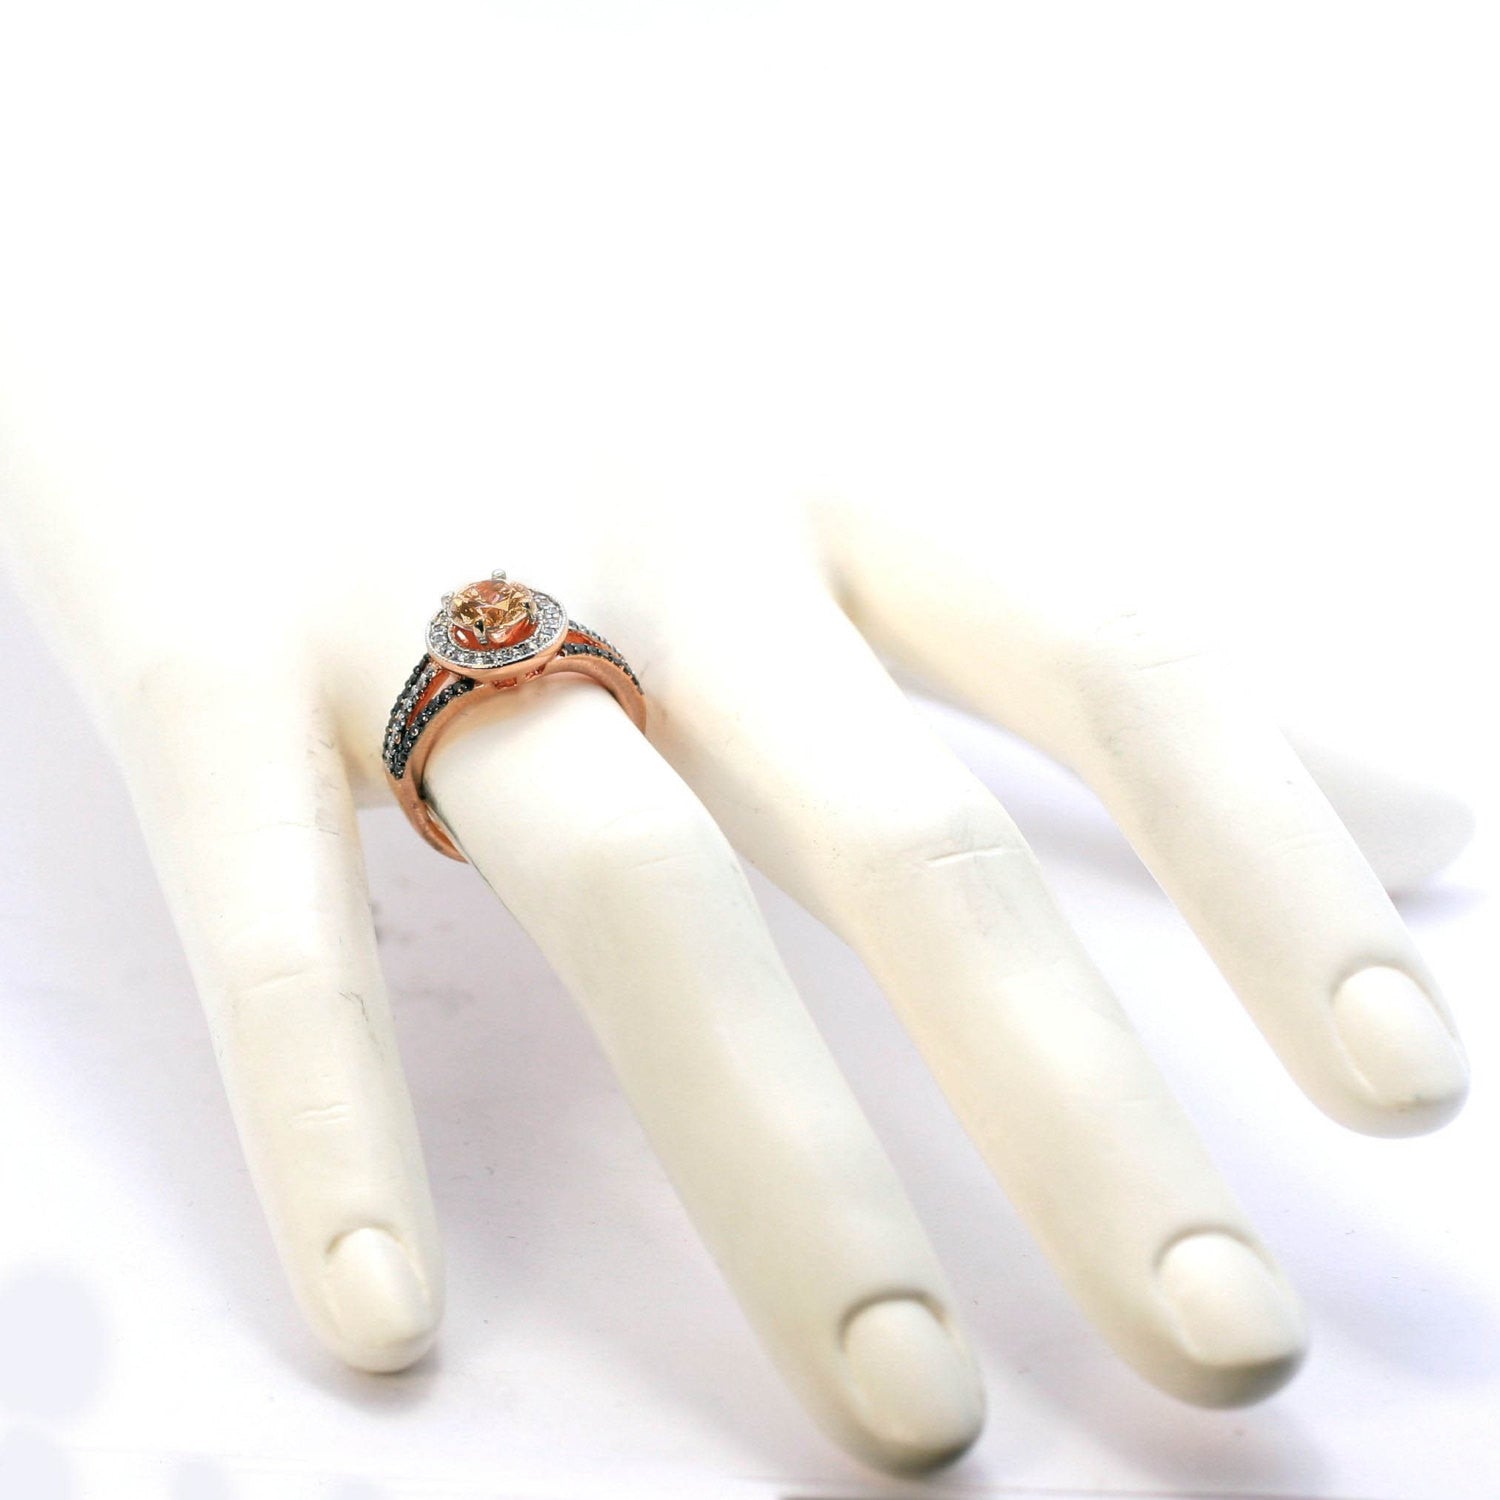 1 Carat Morganite Engagement Ring, Floating Halo Rose Gold, White & Brown Diamonds, Anniversary Ring - MG94627